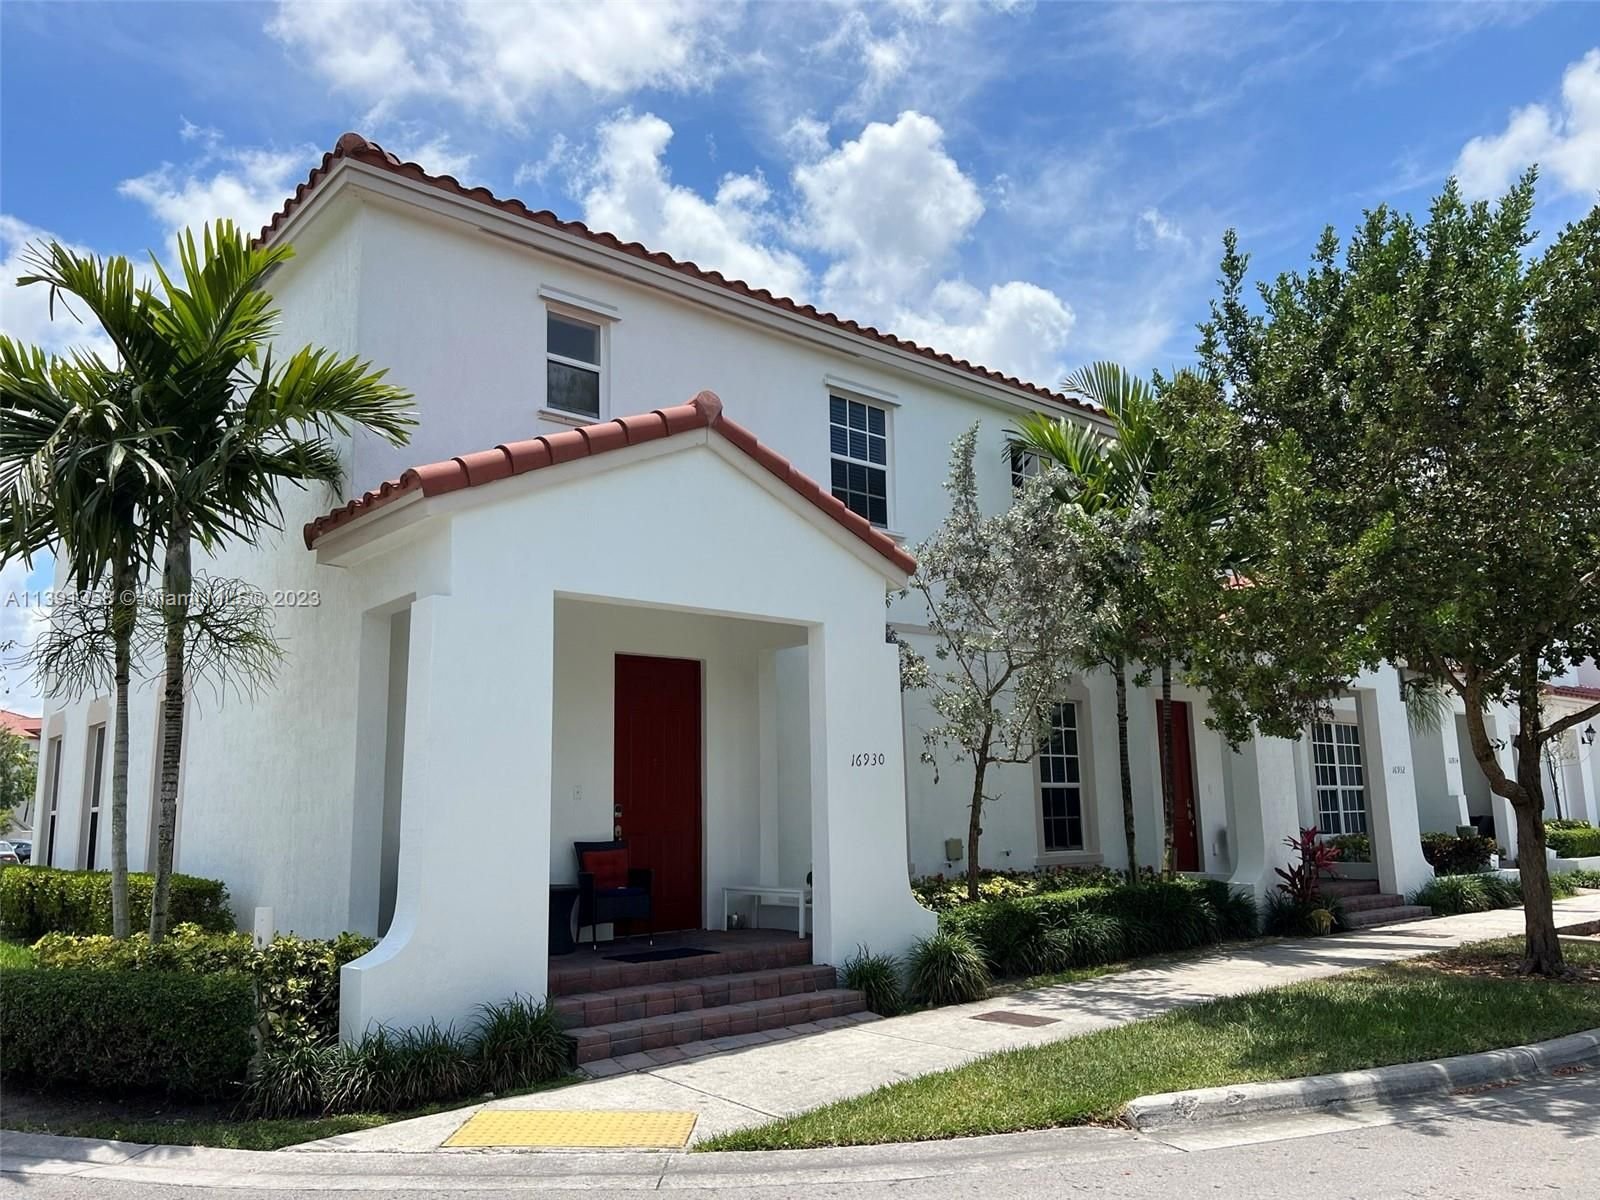 Real estate property located at 16930 90th St #16930, Miami-Dade County, Miami, FL